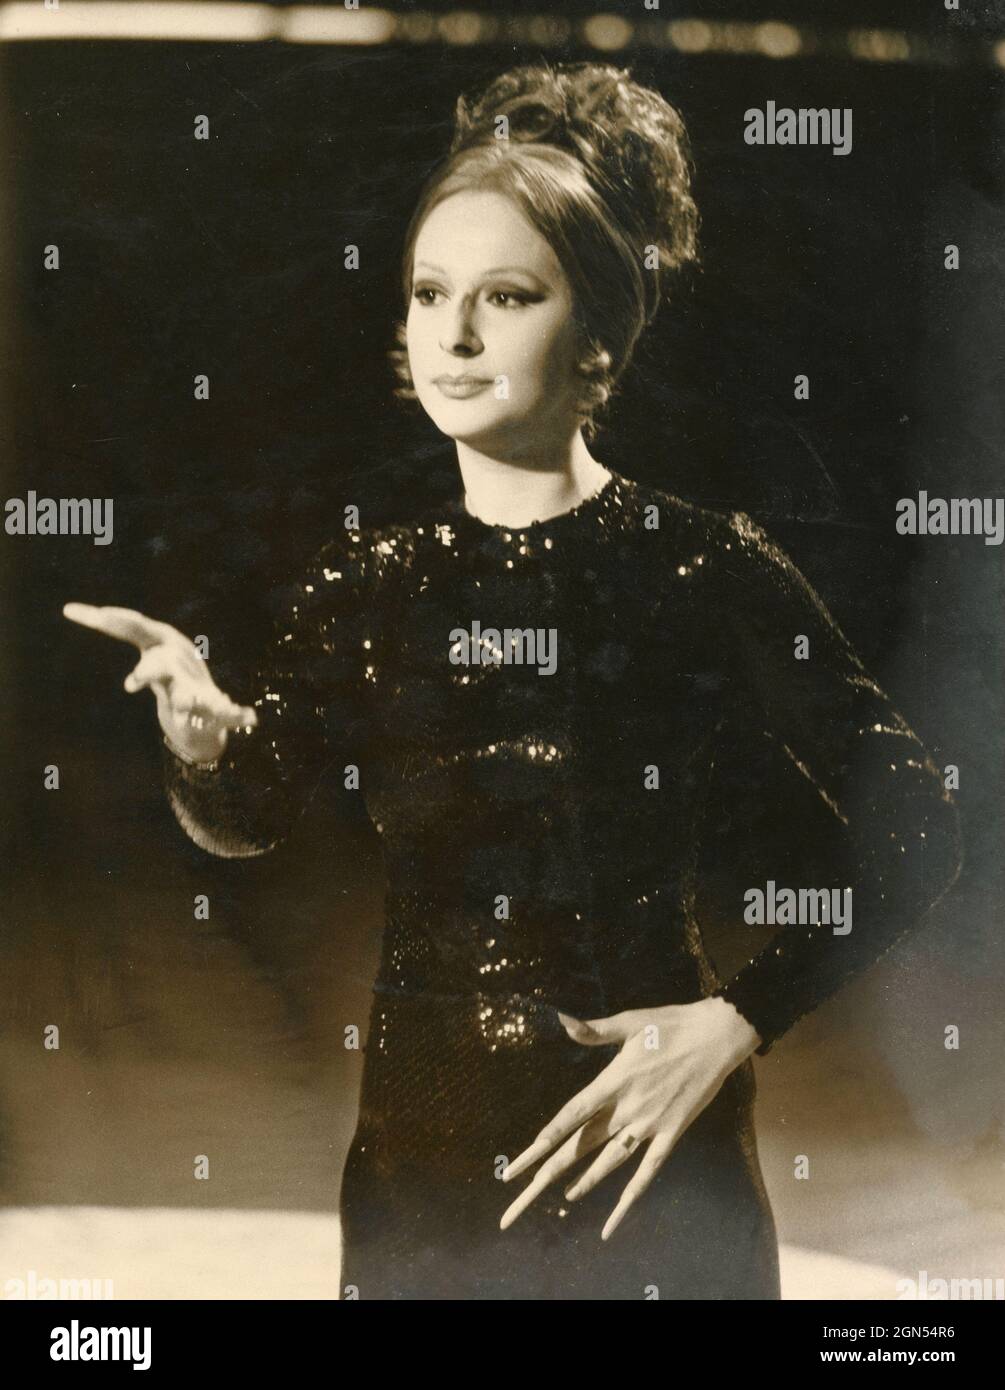 Italian actress and impersonator Loretta Goggi plays Barbara Straisand at TV show Canzonissima, 1972 Stock Photo